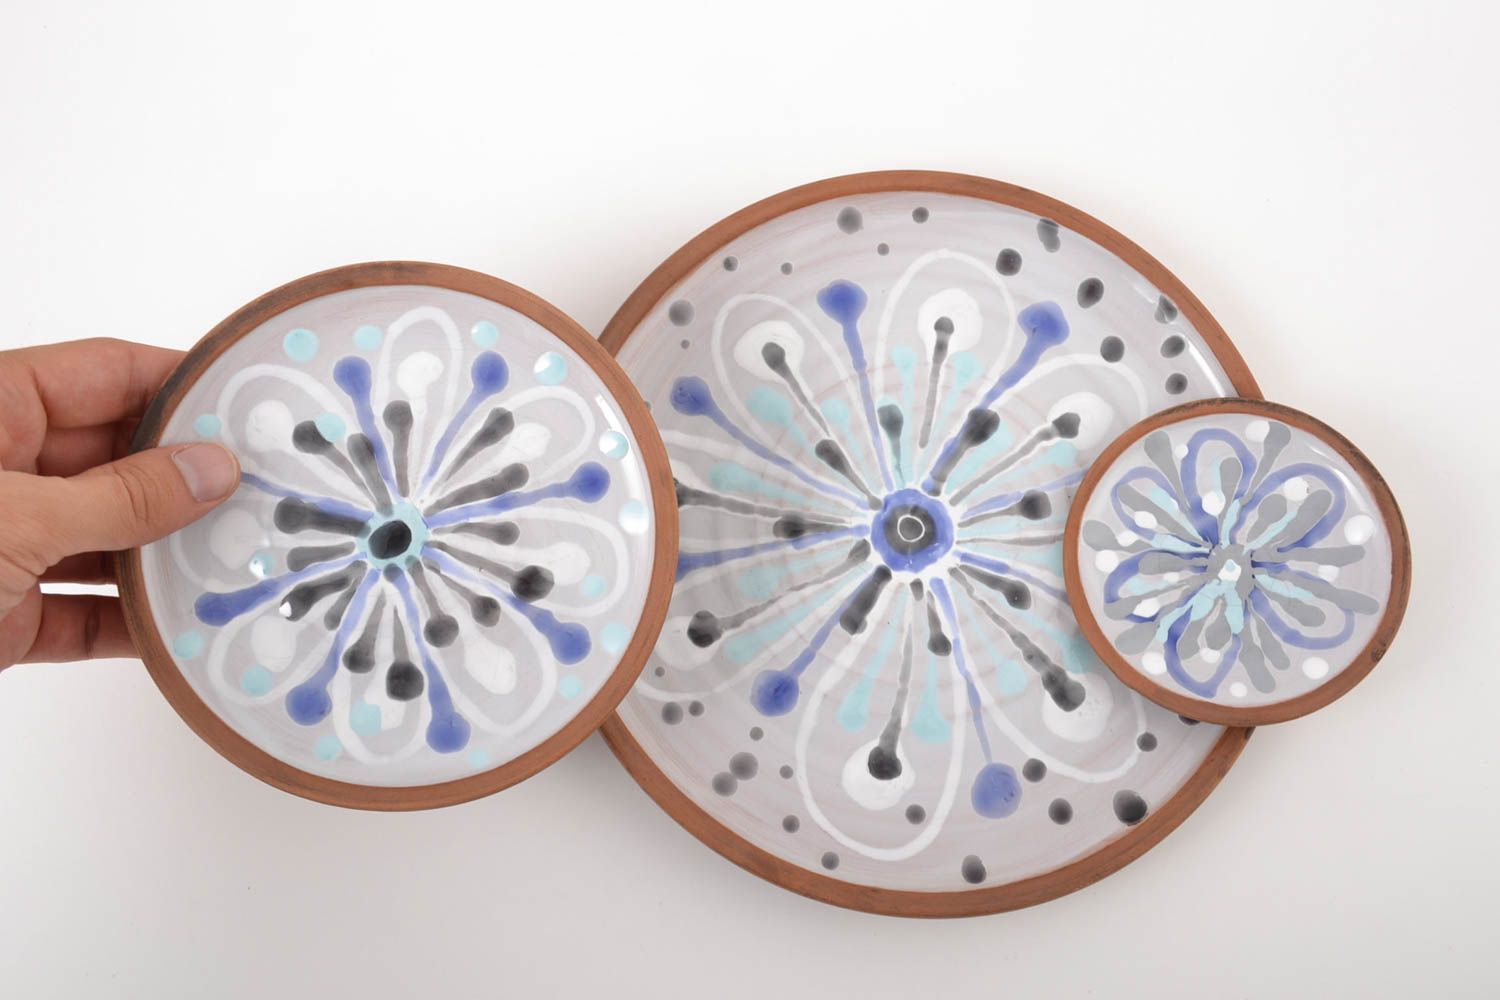 Handmade plates clay plates designer kitchenware handmade pottery decor ideas photo 2